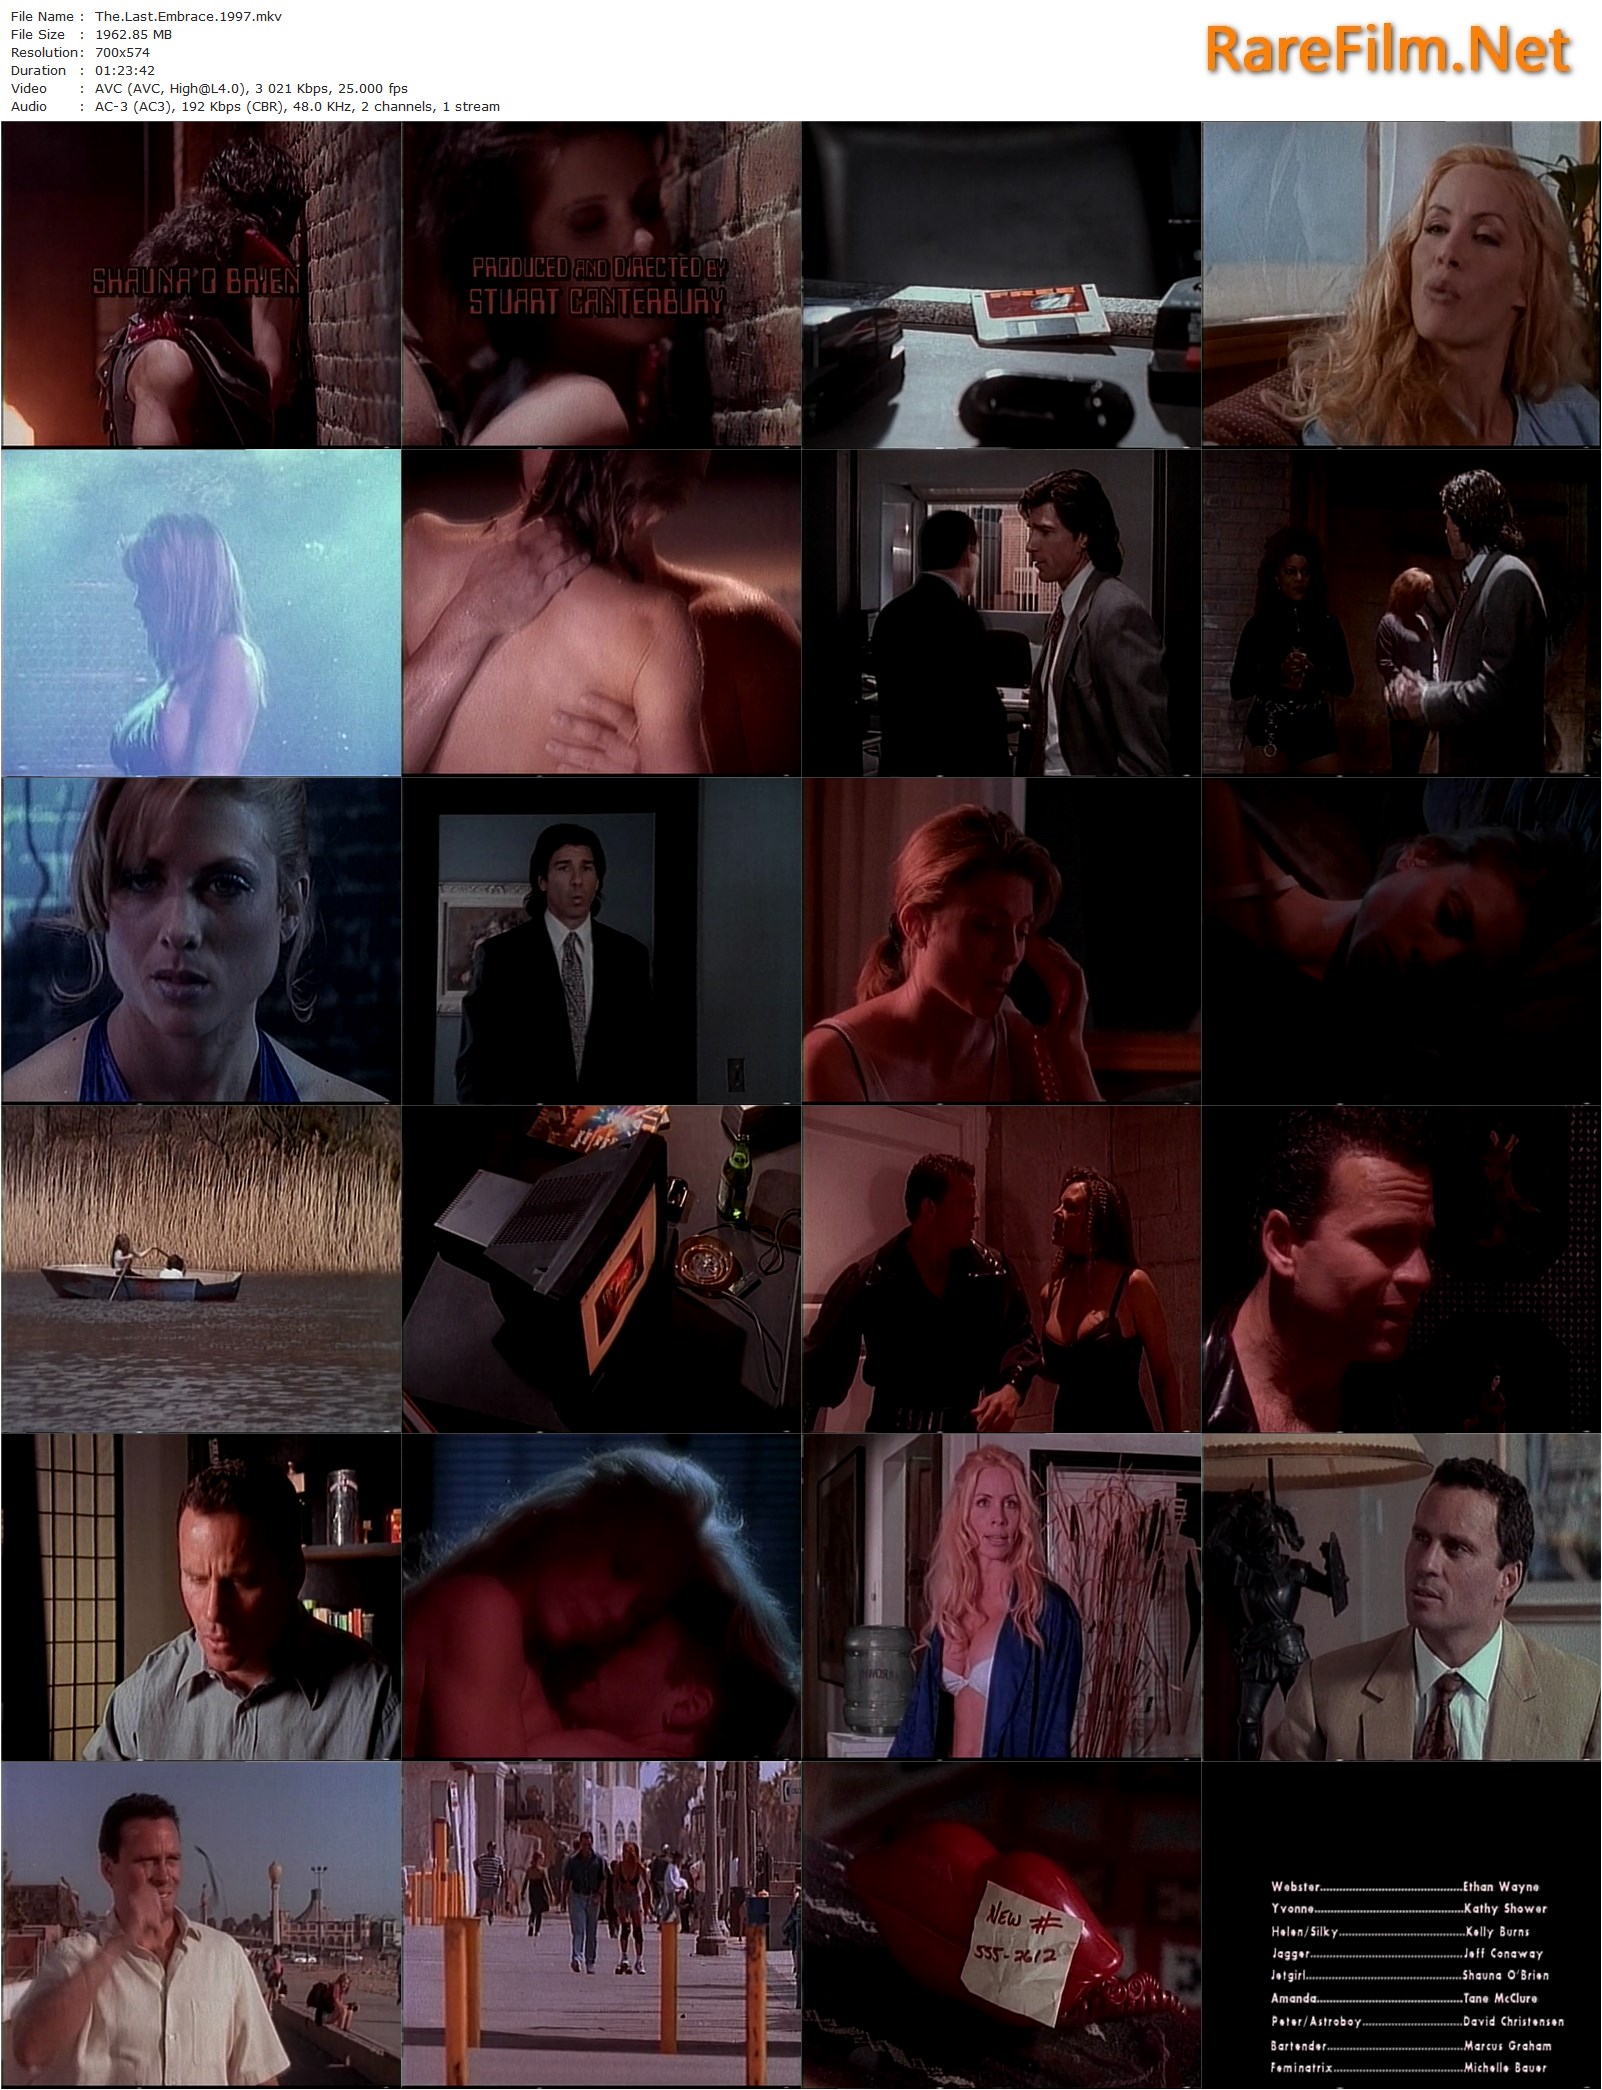 The Last Embrace (1997) Stuart Canterbury, Ethan Wayne, Kathy Shower, Kehli...